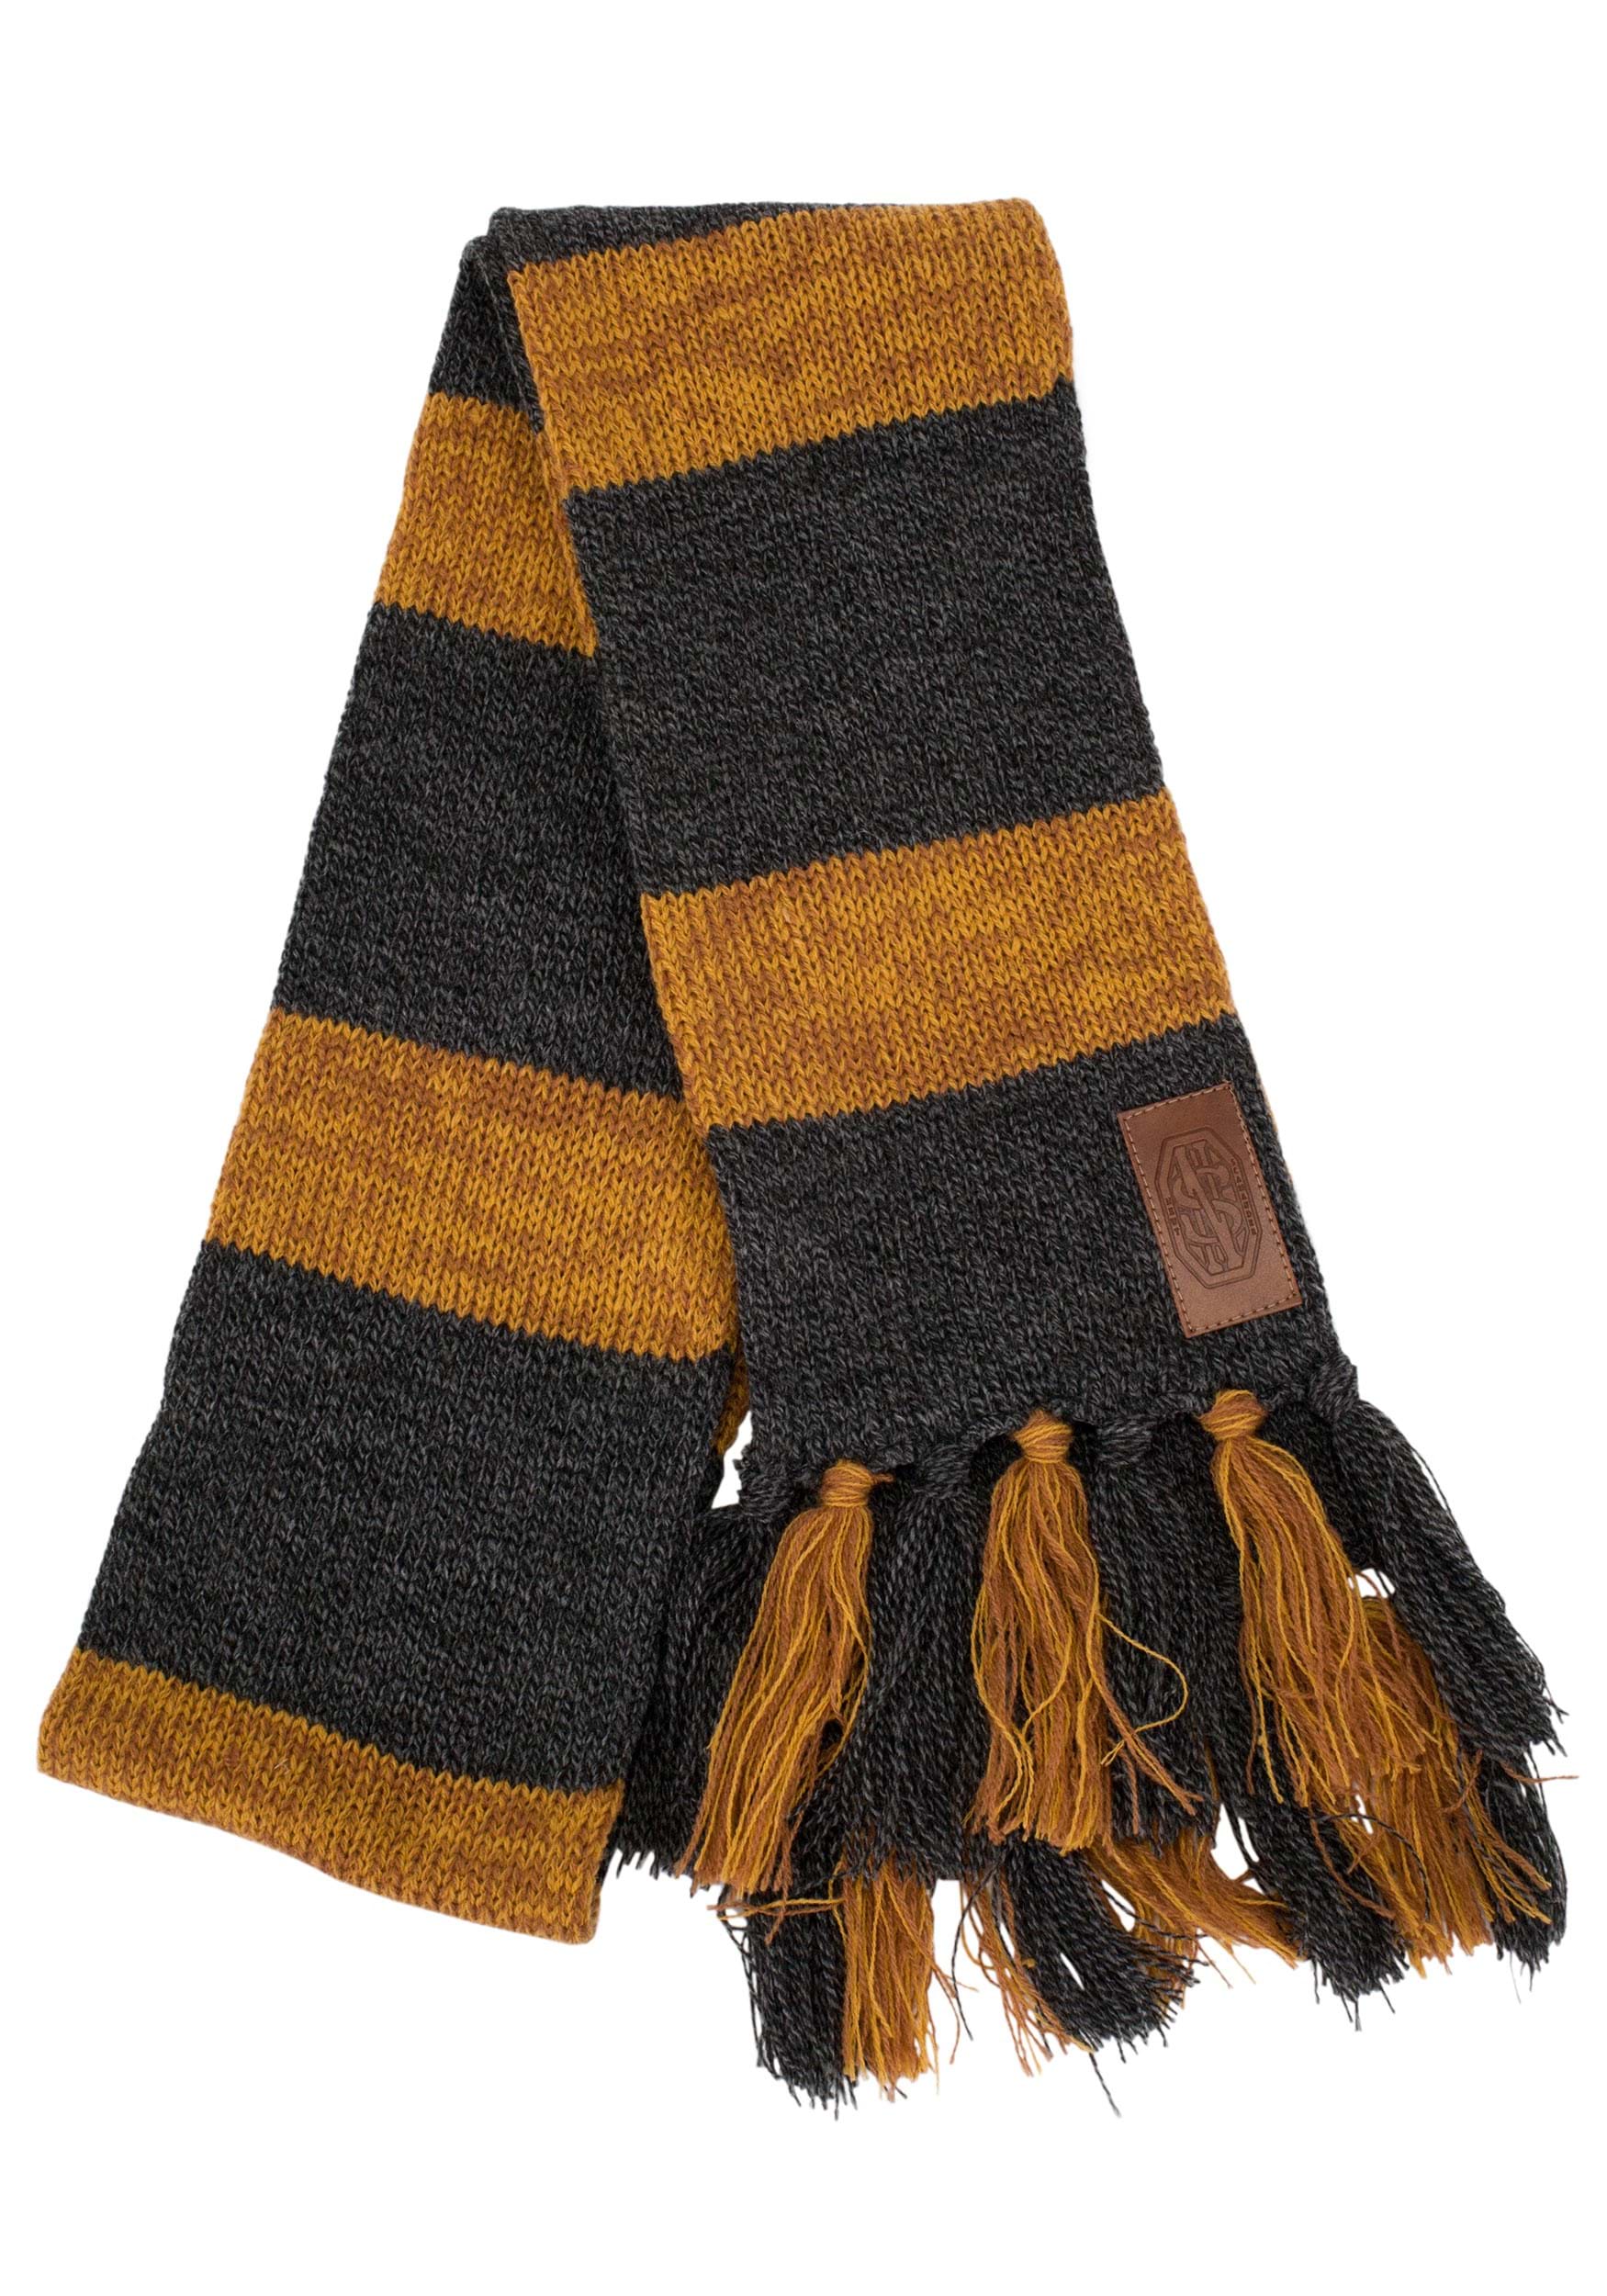 Newt Scamander Hufflepuff Knit Scarf From Elope Fandom Shop - er scarf roblox